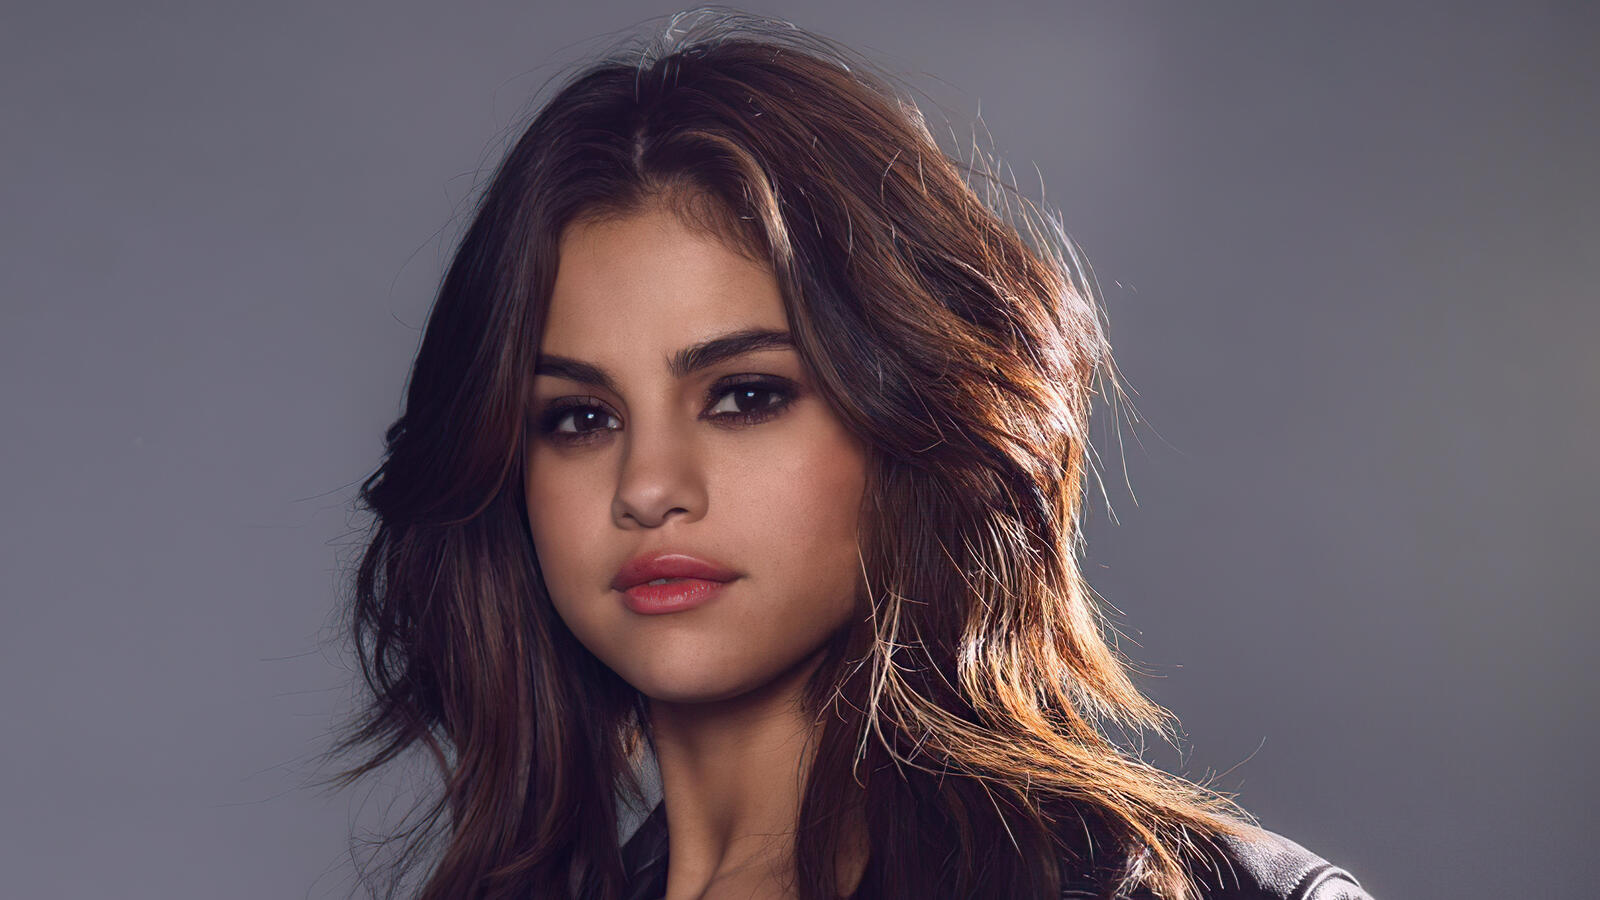 Wallpapers Selena Gomez celebrities photoshoot on the desktop